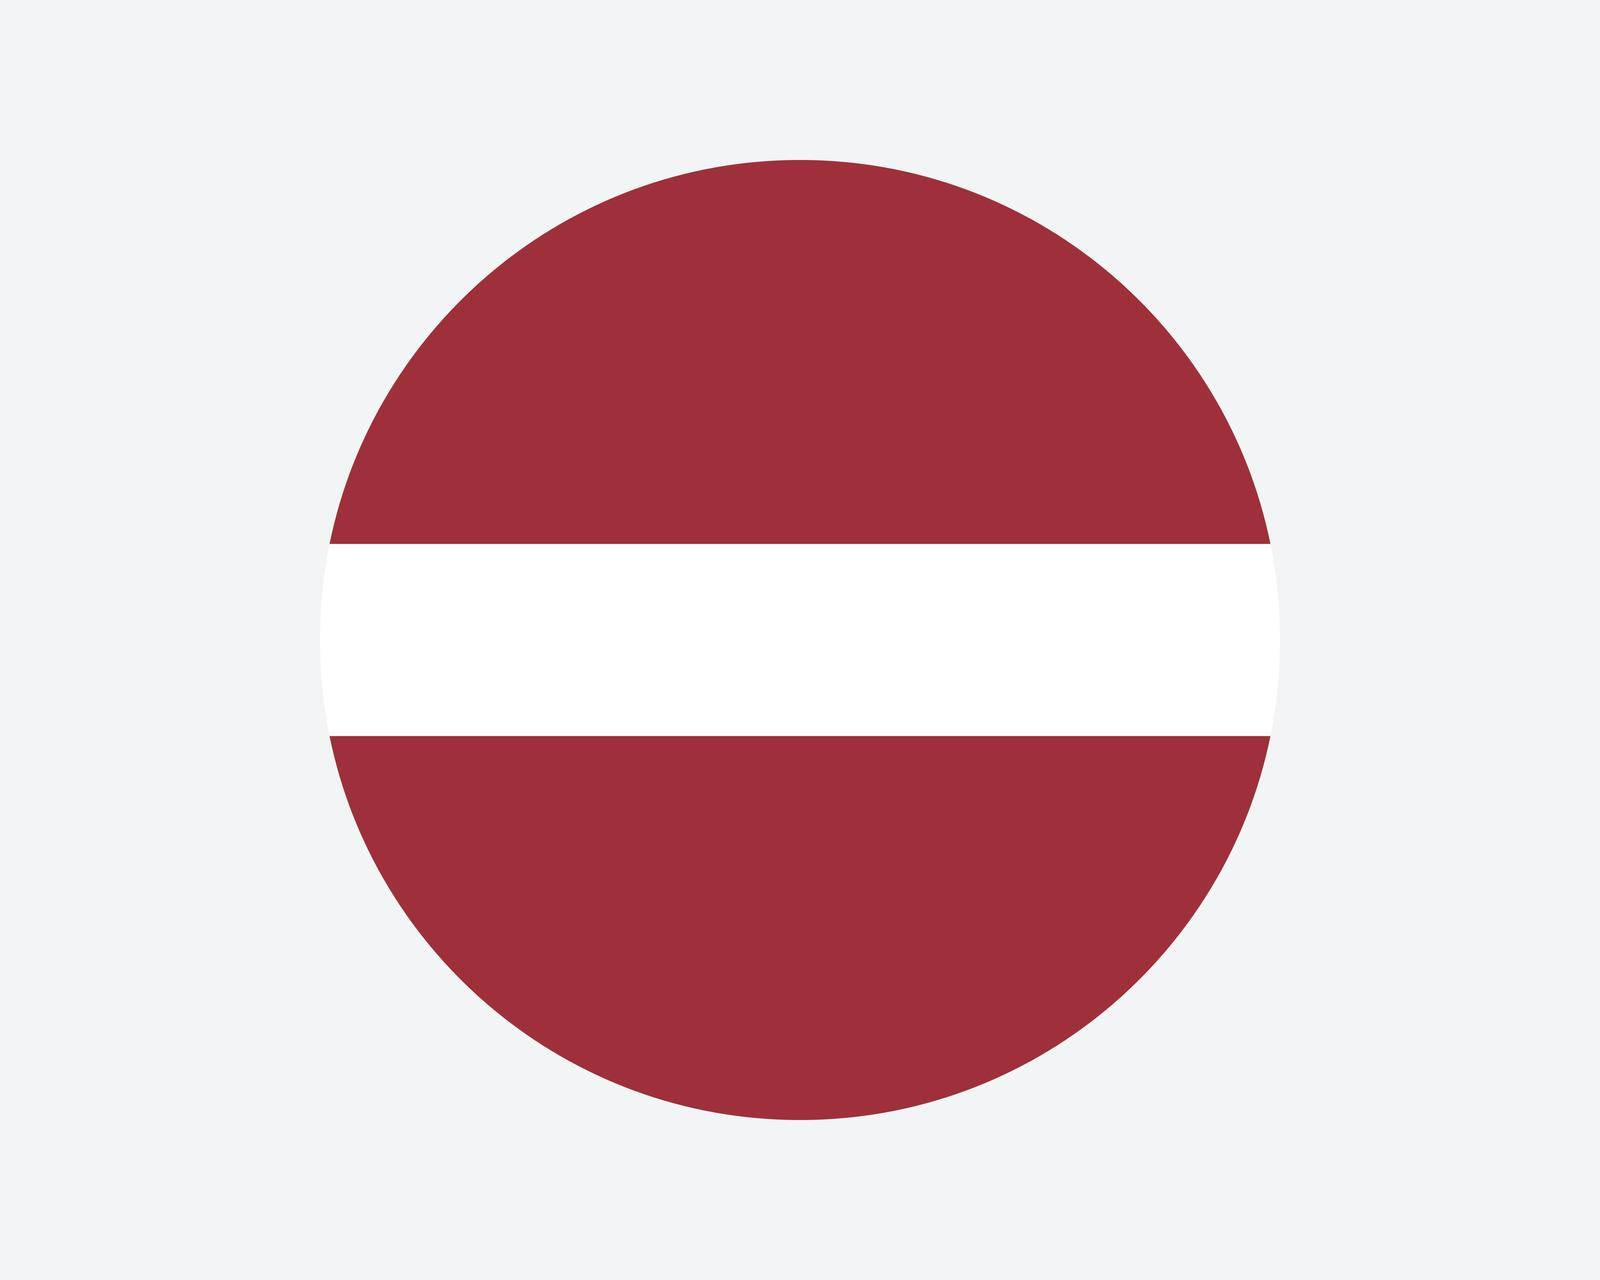 Latvia Round Country Flag. Latvian Circle National Flag. Republic of Latvia Circular Shape Button Banner. EPS Vector Illustration.